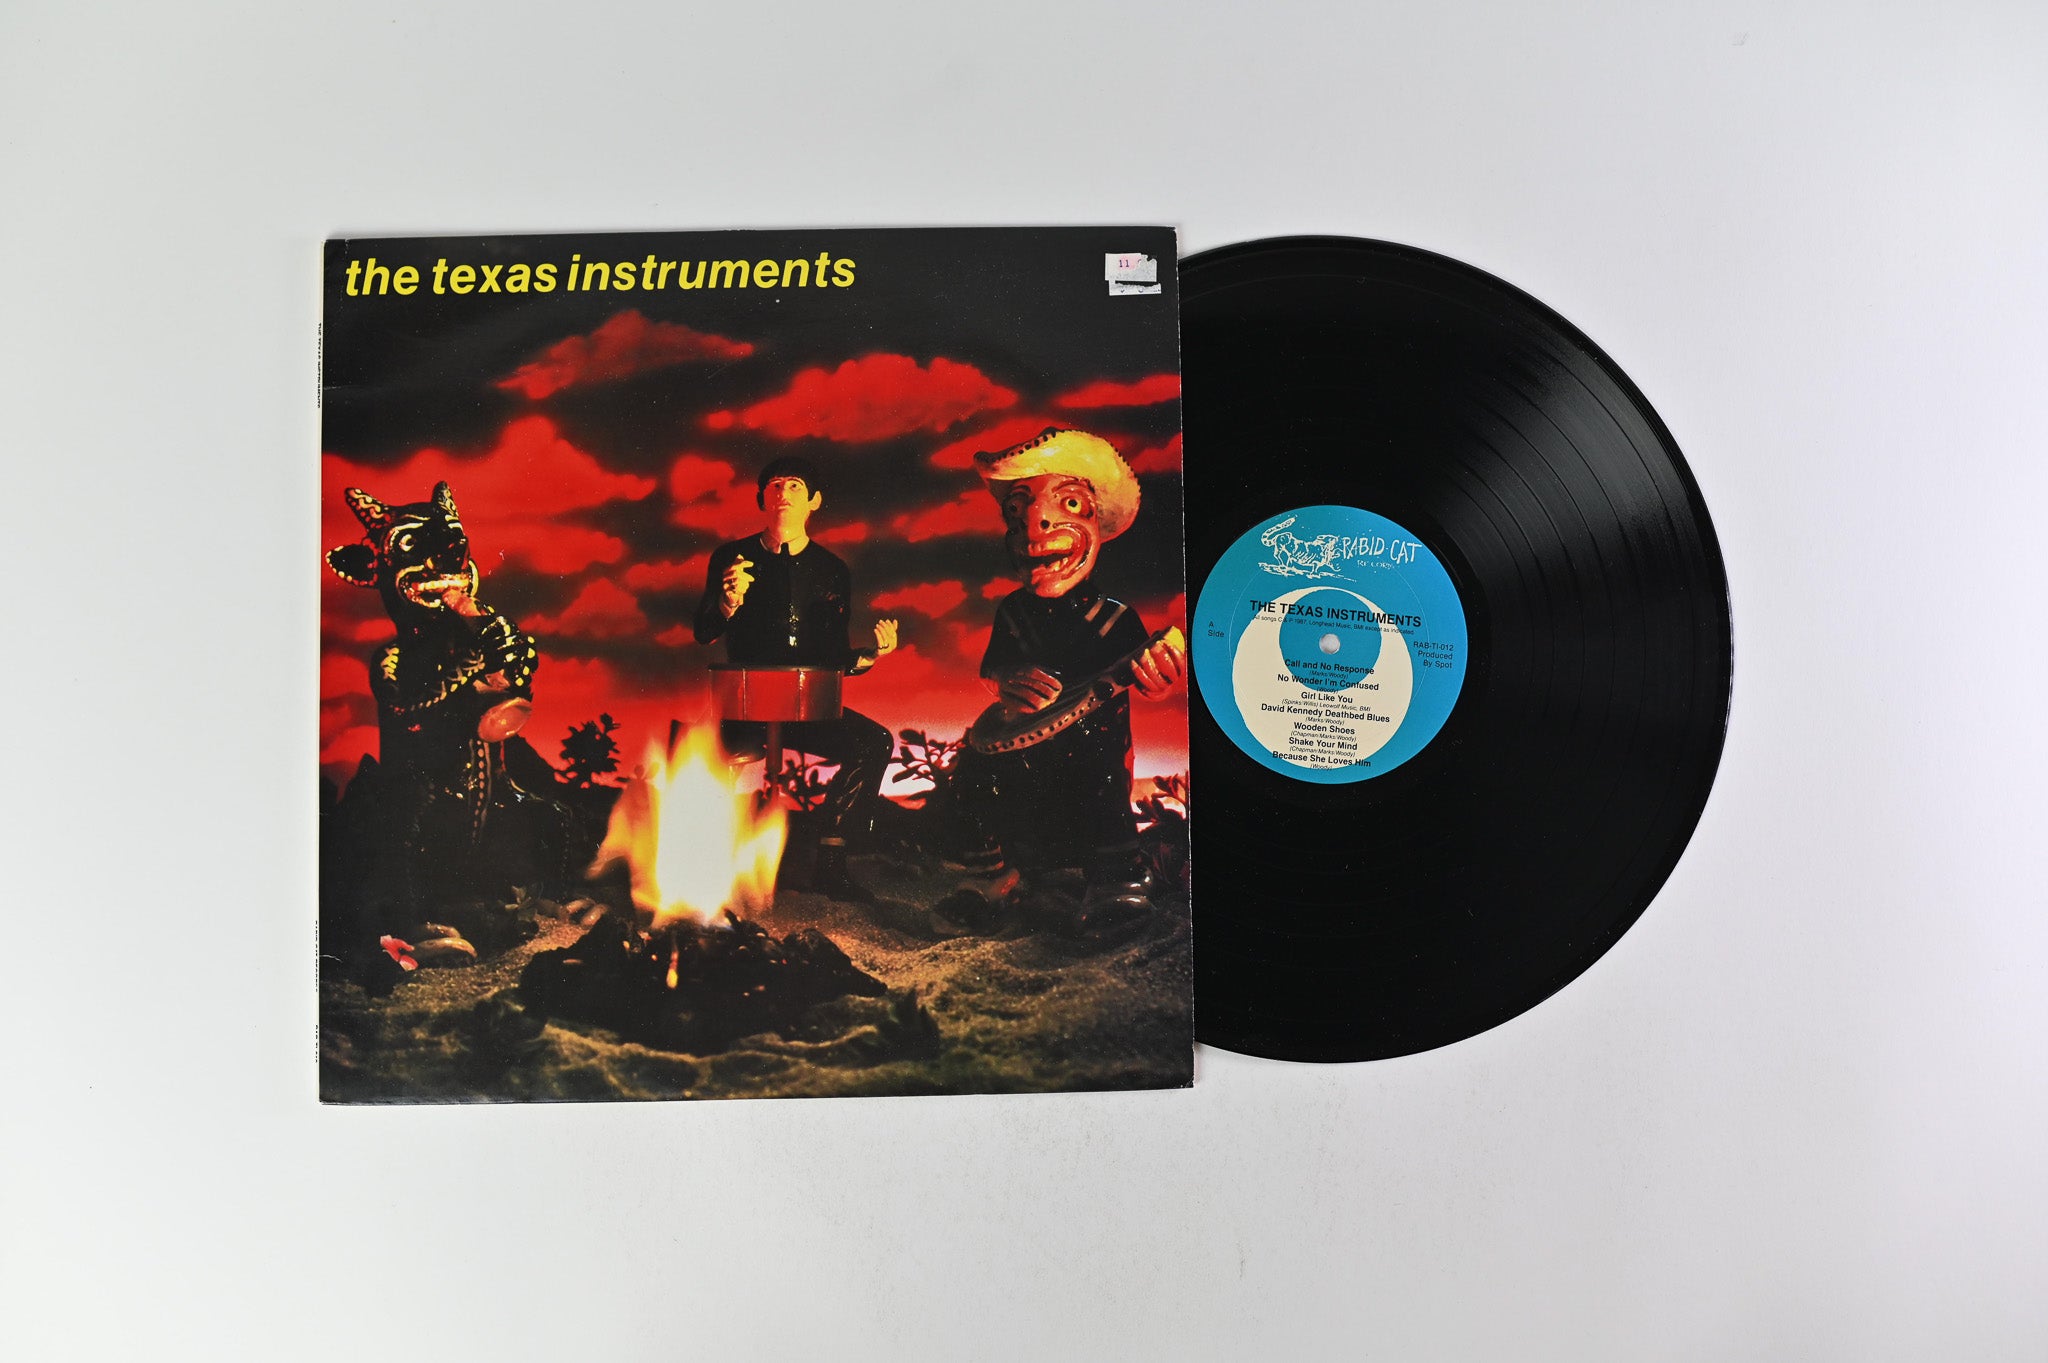 Texas Instruments The - The Texas Instruments on Rabid Cat Records